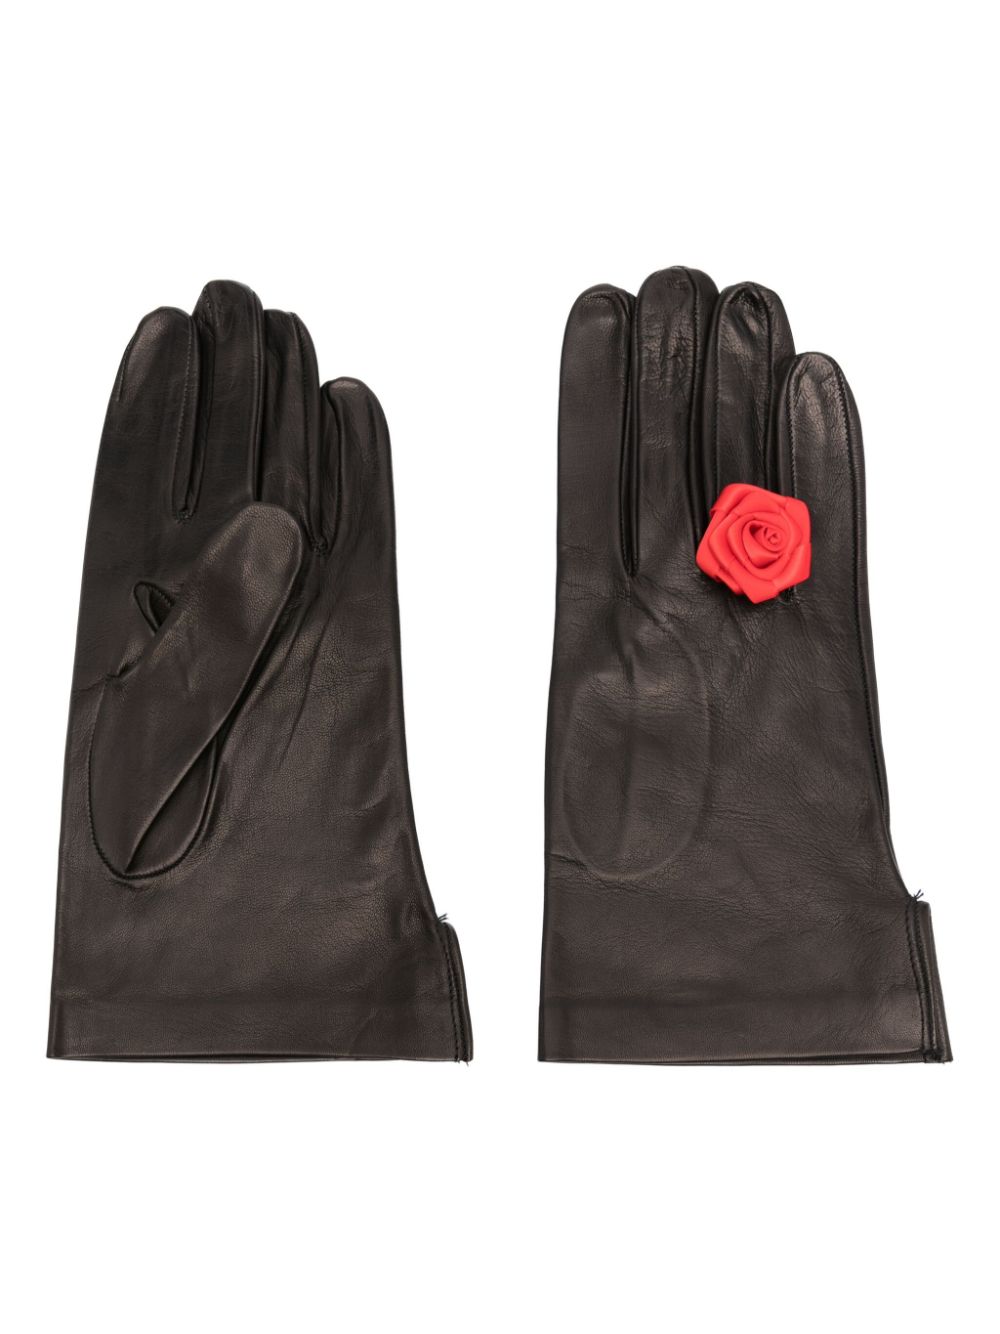 CANAKU floral-appliqu leather gloves